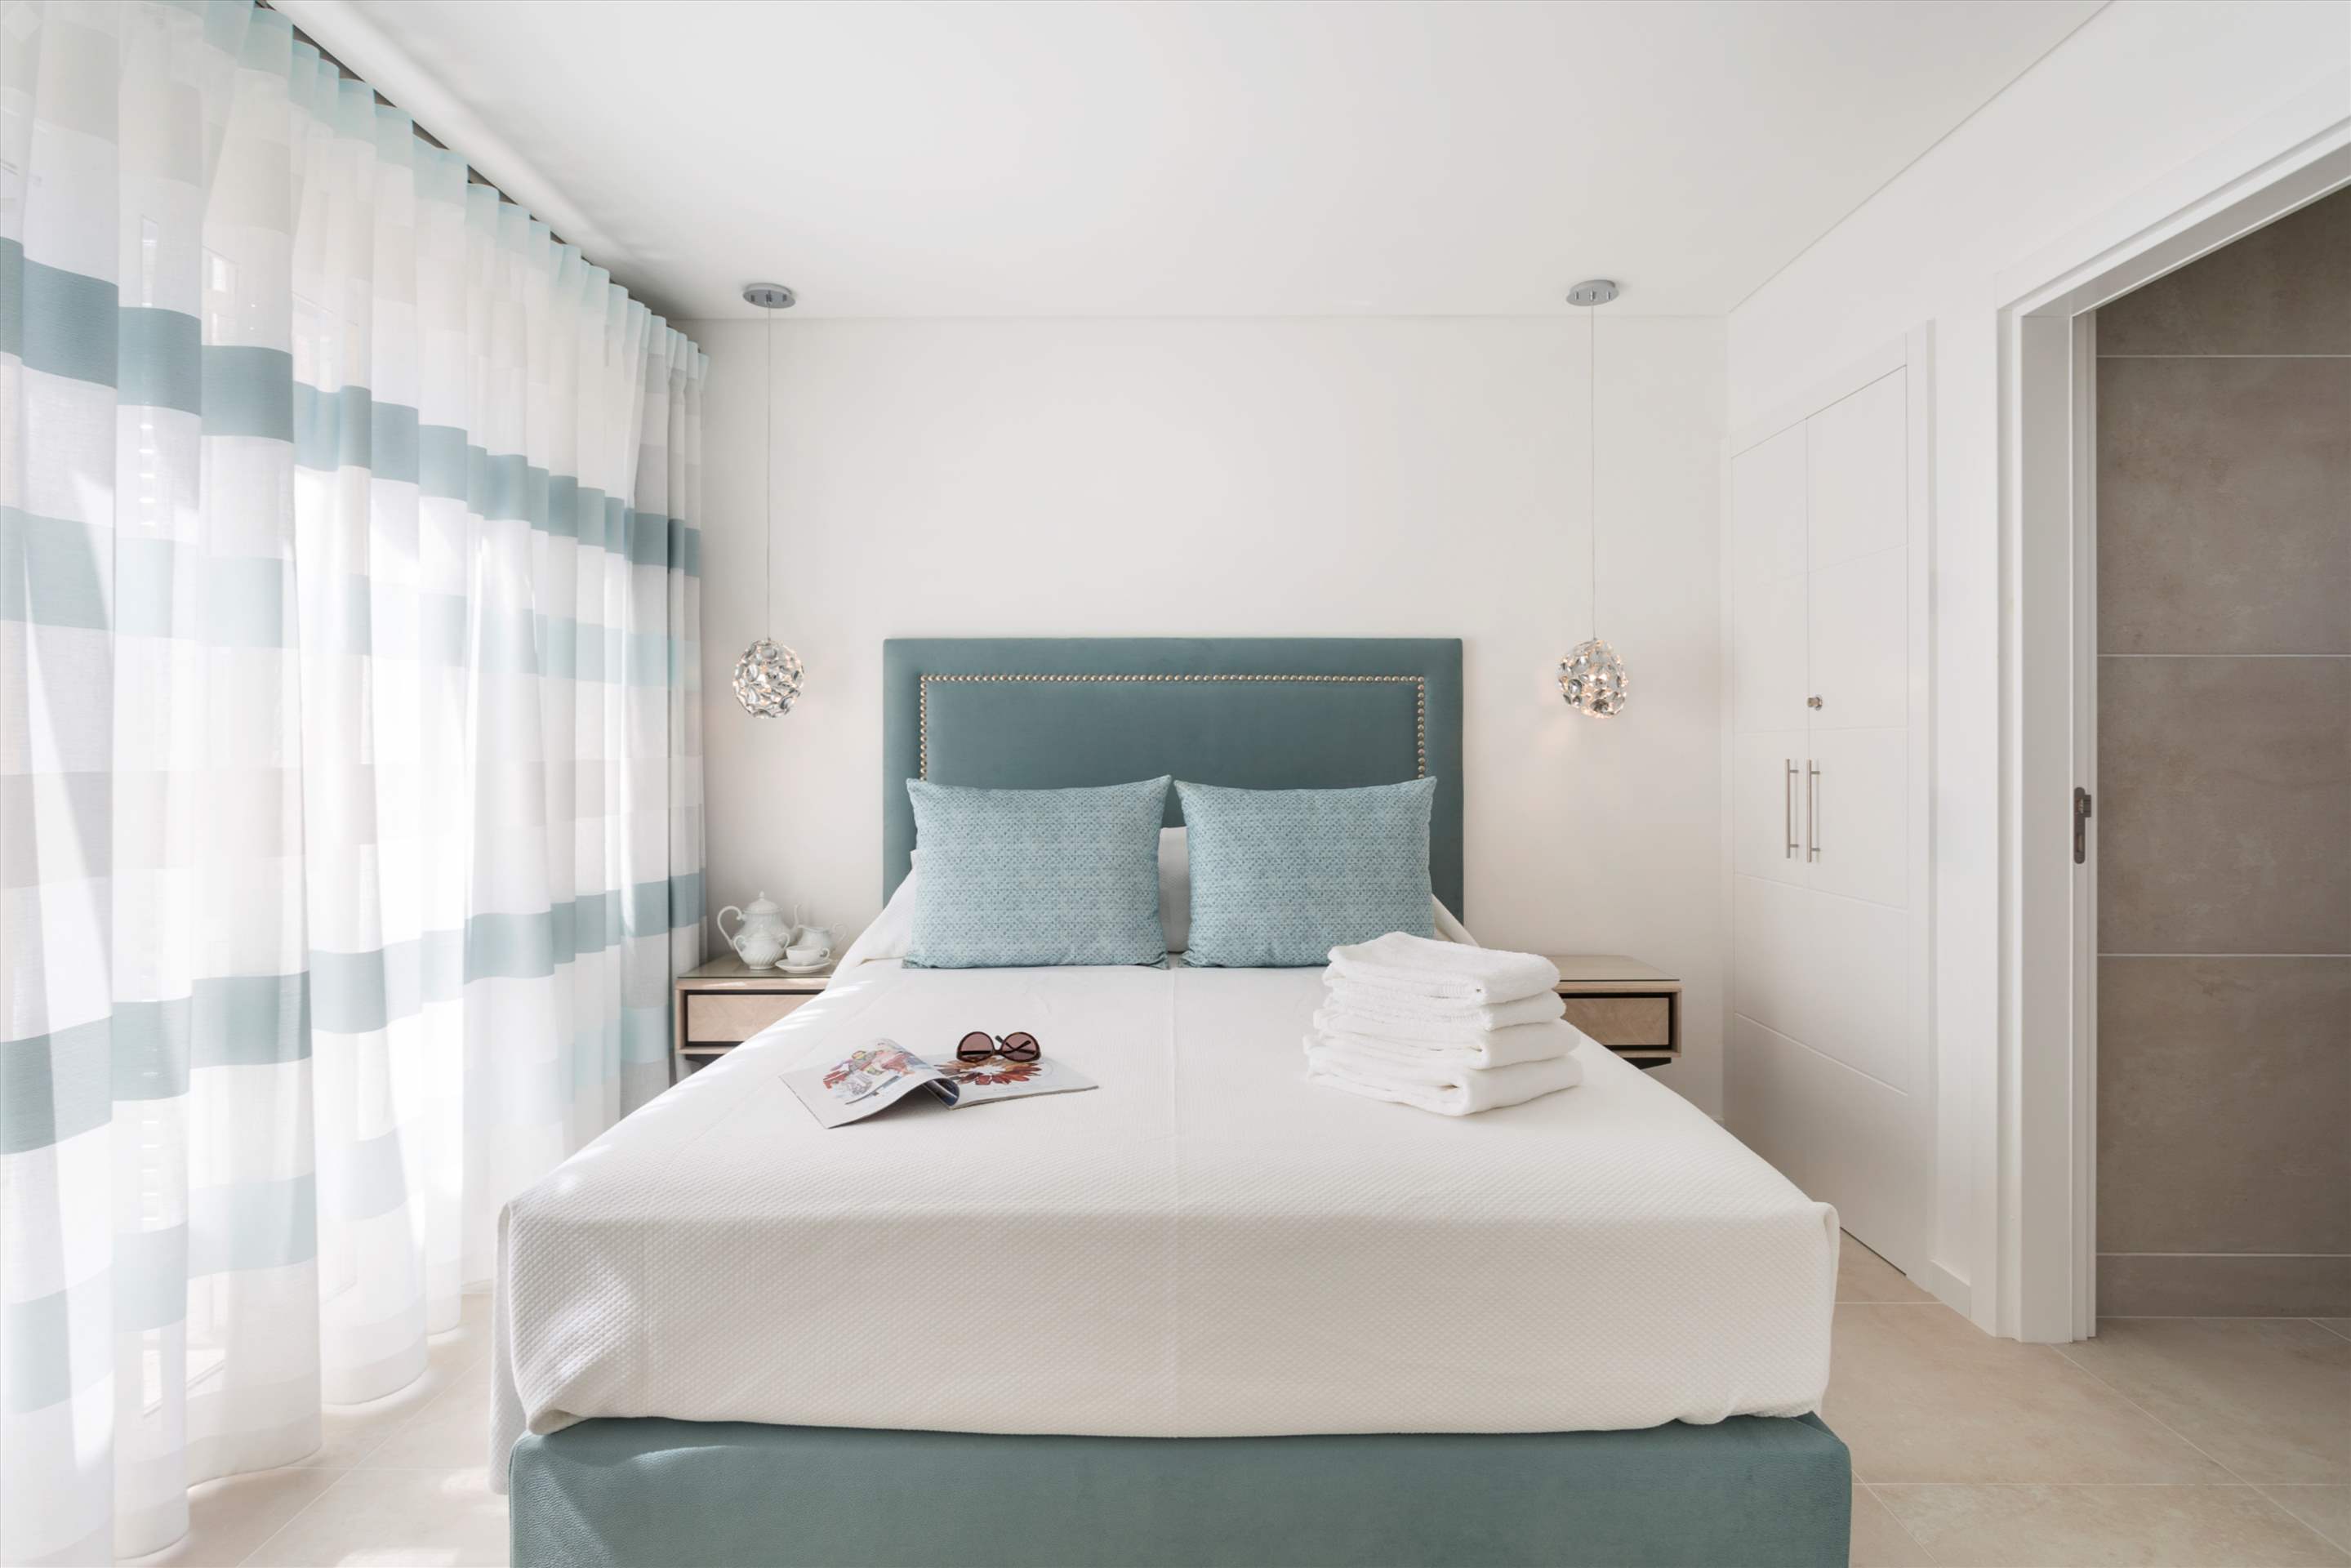 Sao Lourenco Village one bed Apartment, 1 bedroom apartment in Quinta do Lago, Algarve Photo #7